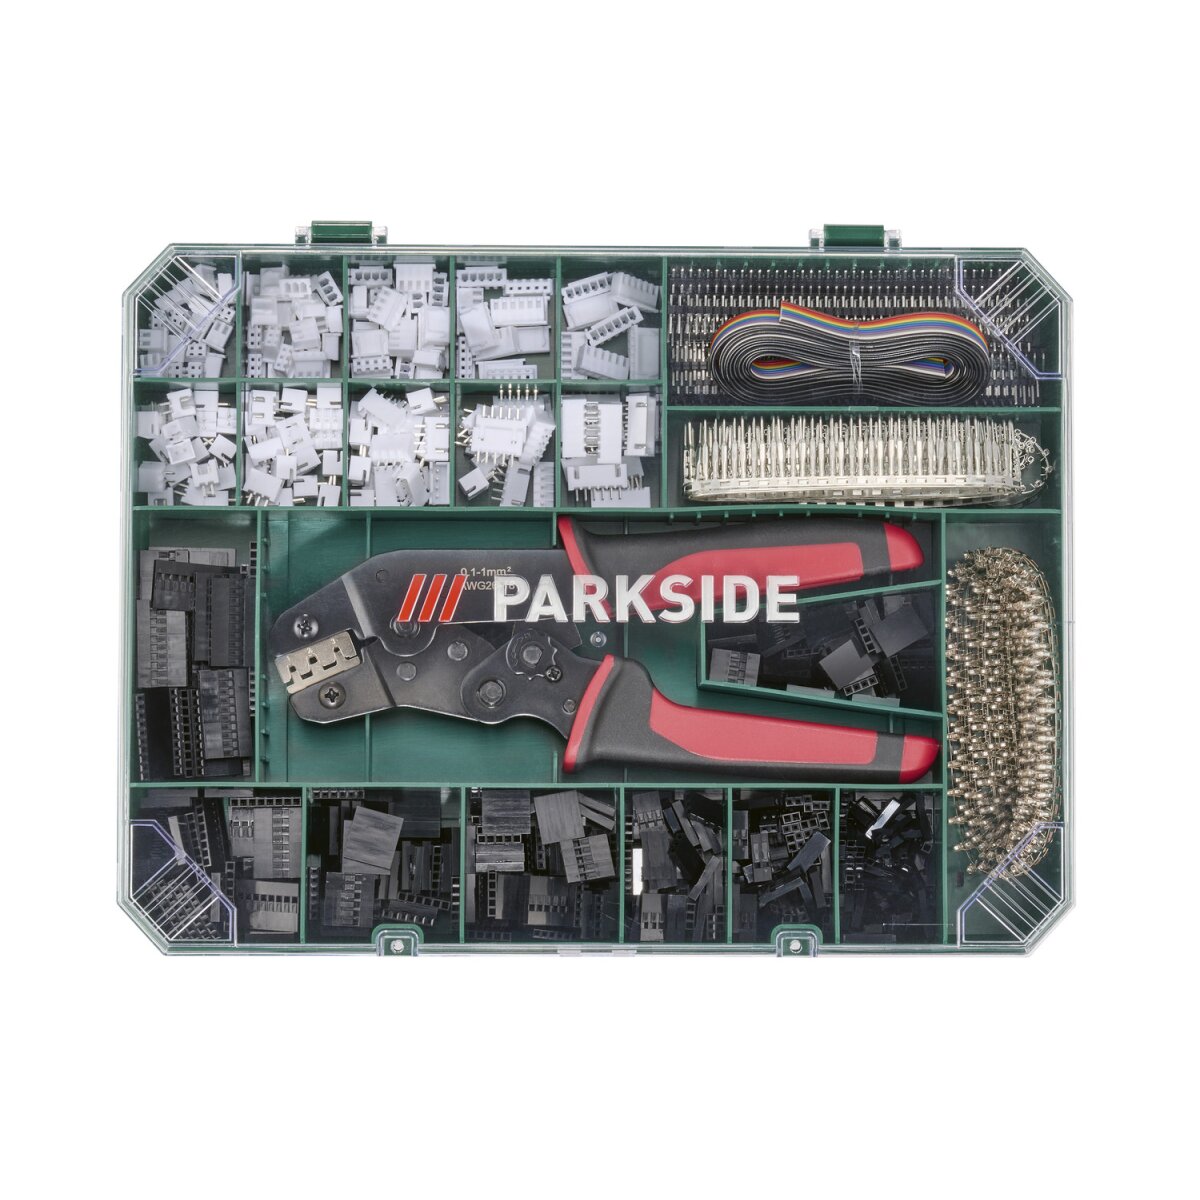 PARKSIDE® Crimpzangen-Set, 2012-teilig - € neuwertig, B-Ware 24,99